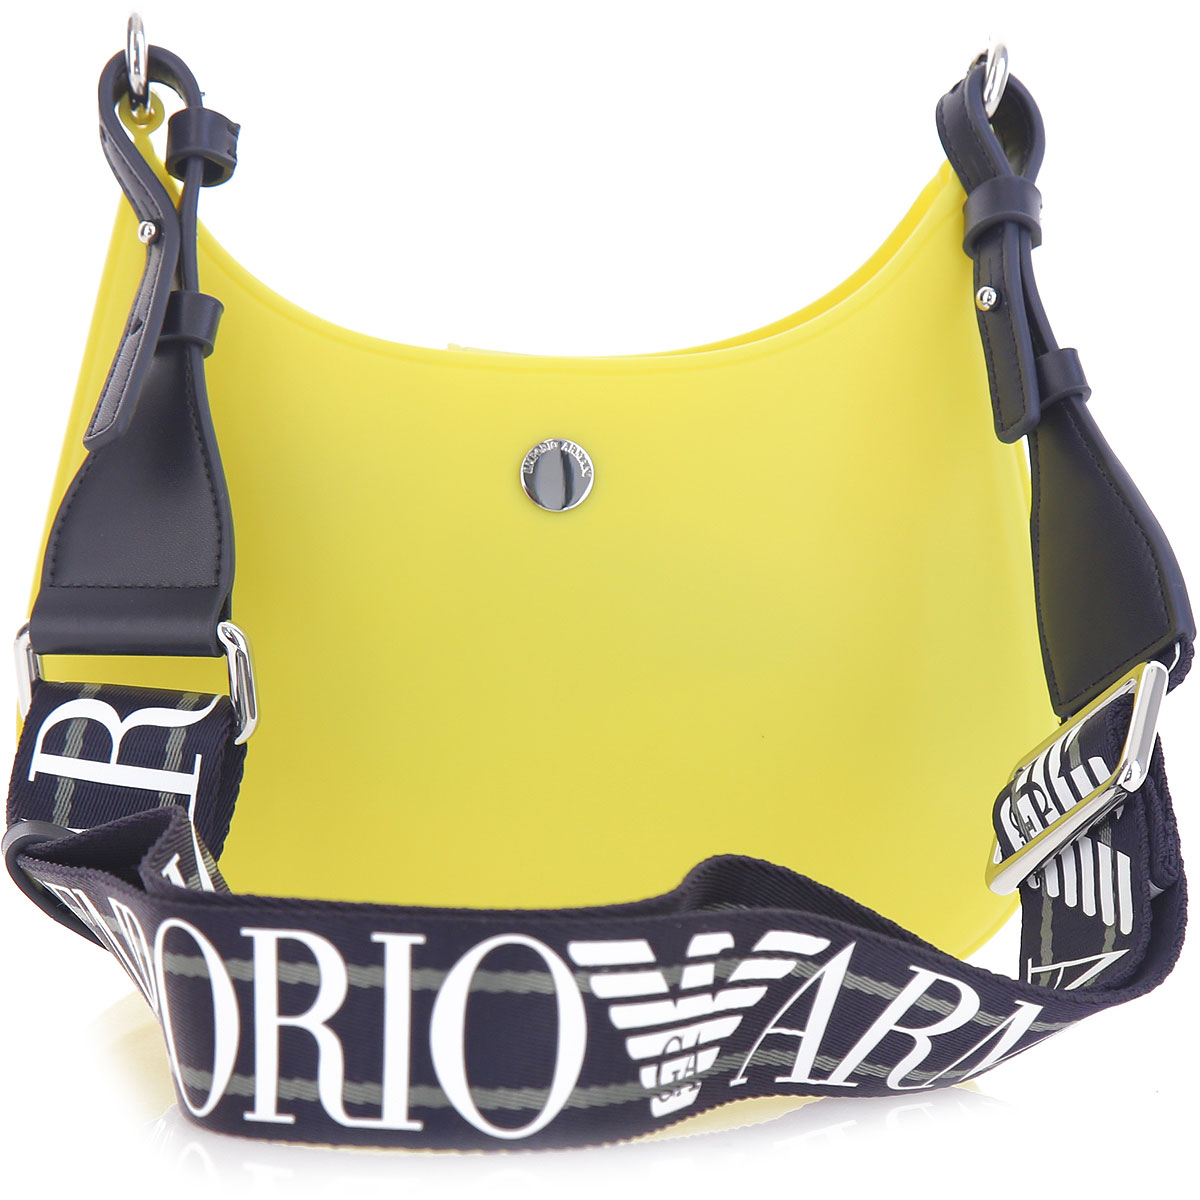 Emporio Armani crossbody bags women Y3H329YWI7E80632 Yellow - Navy bag